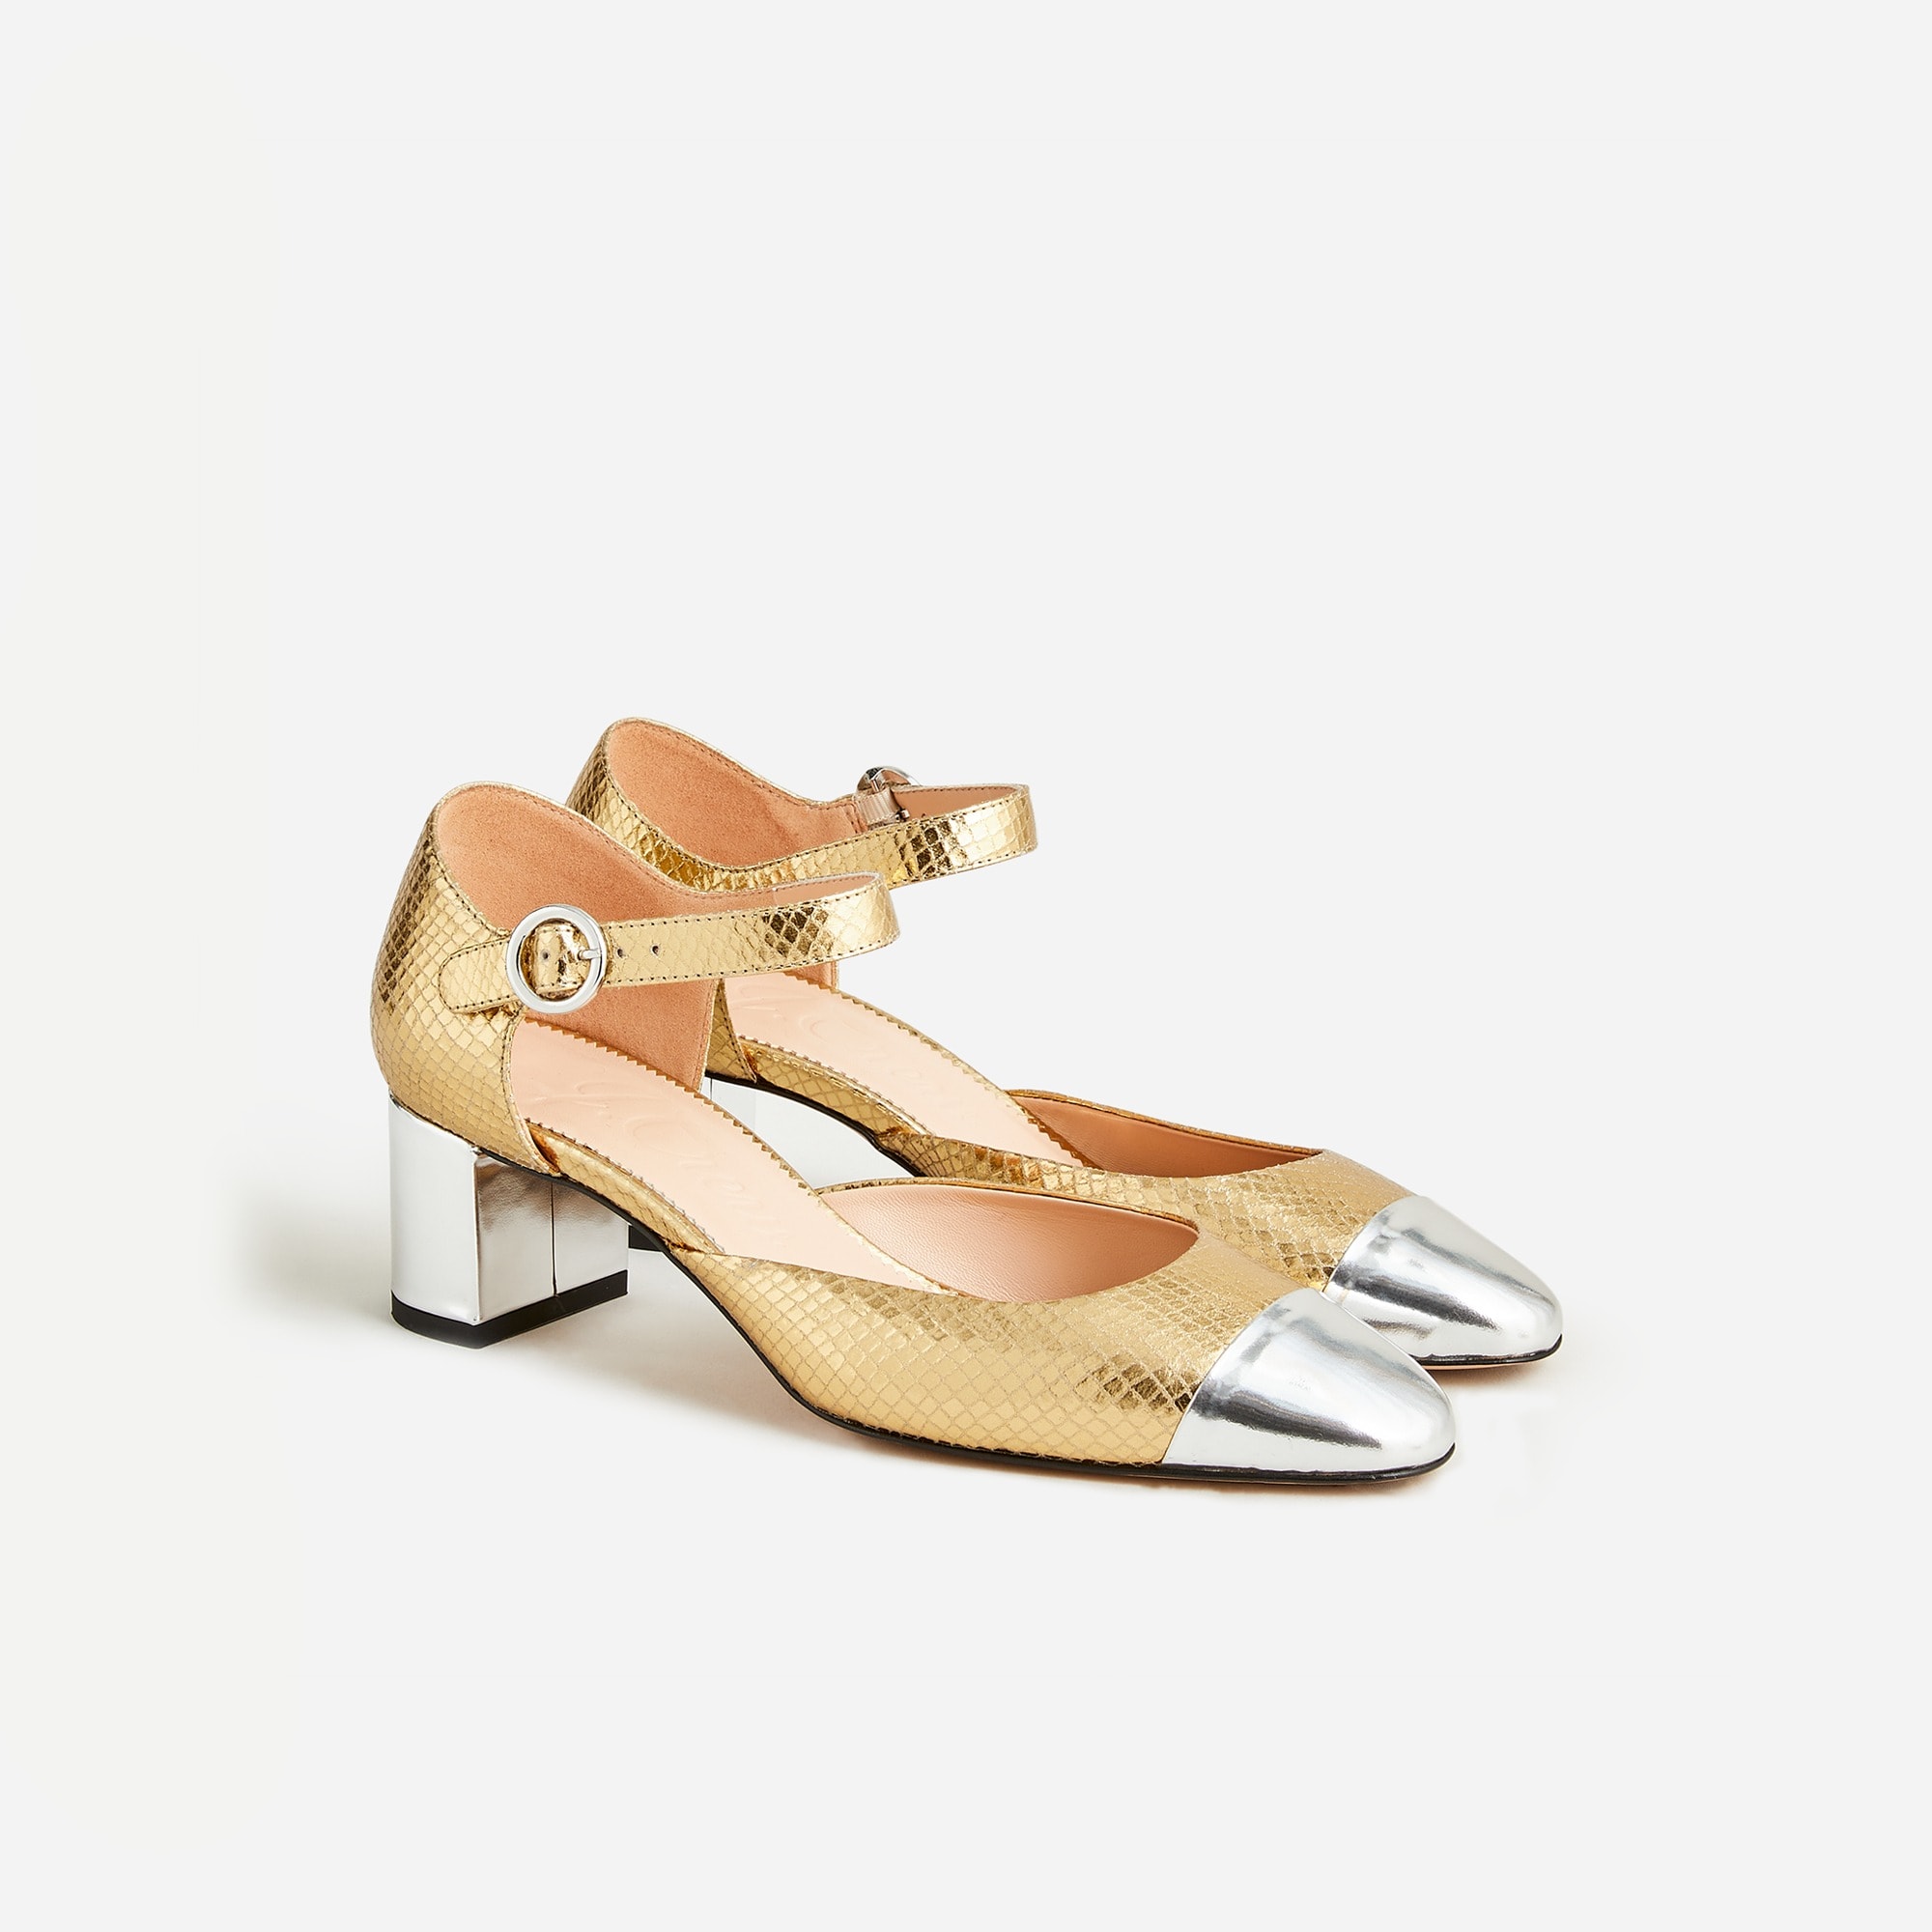  Millie ankle-strap heels in snake-embossed Italian leather